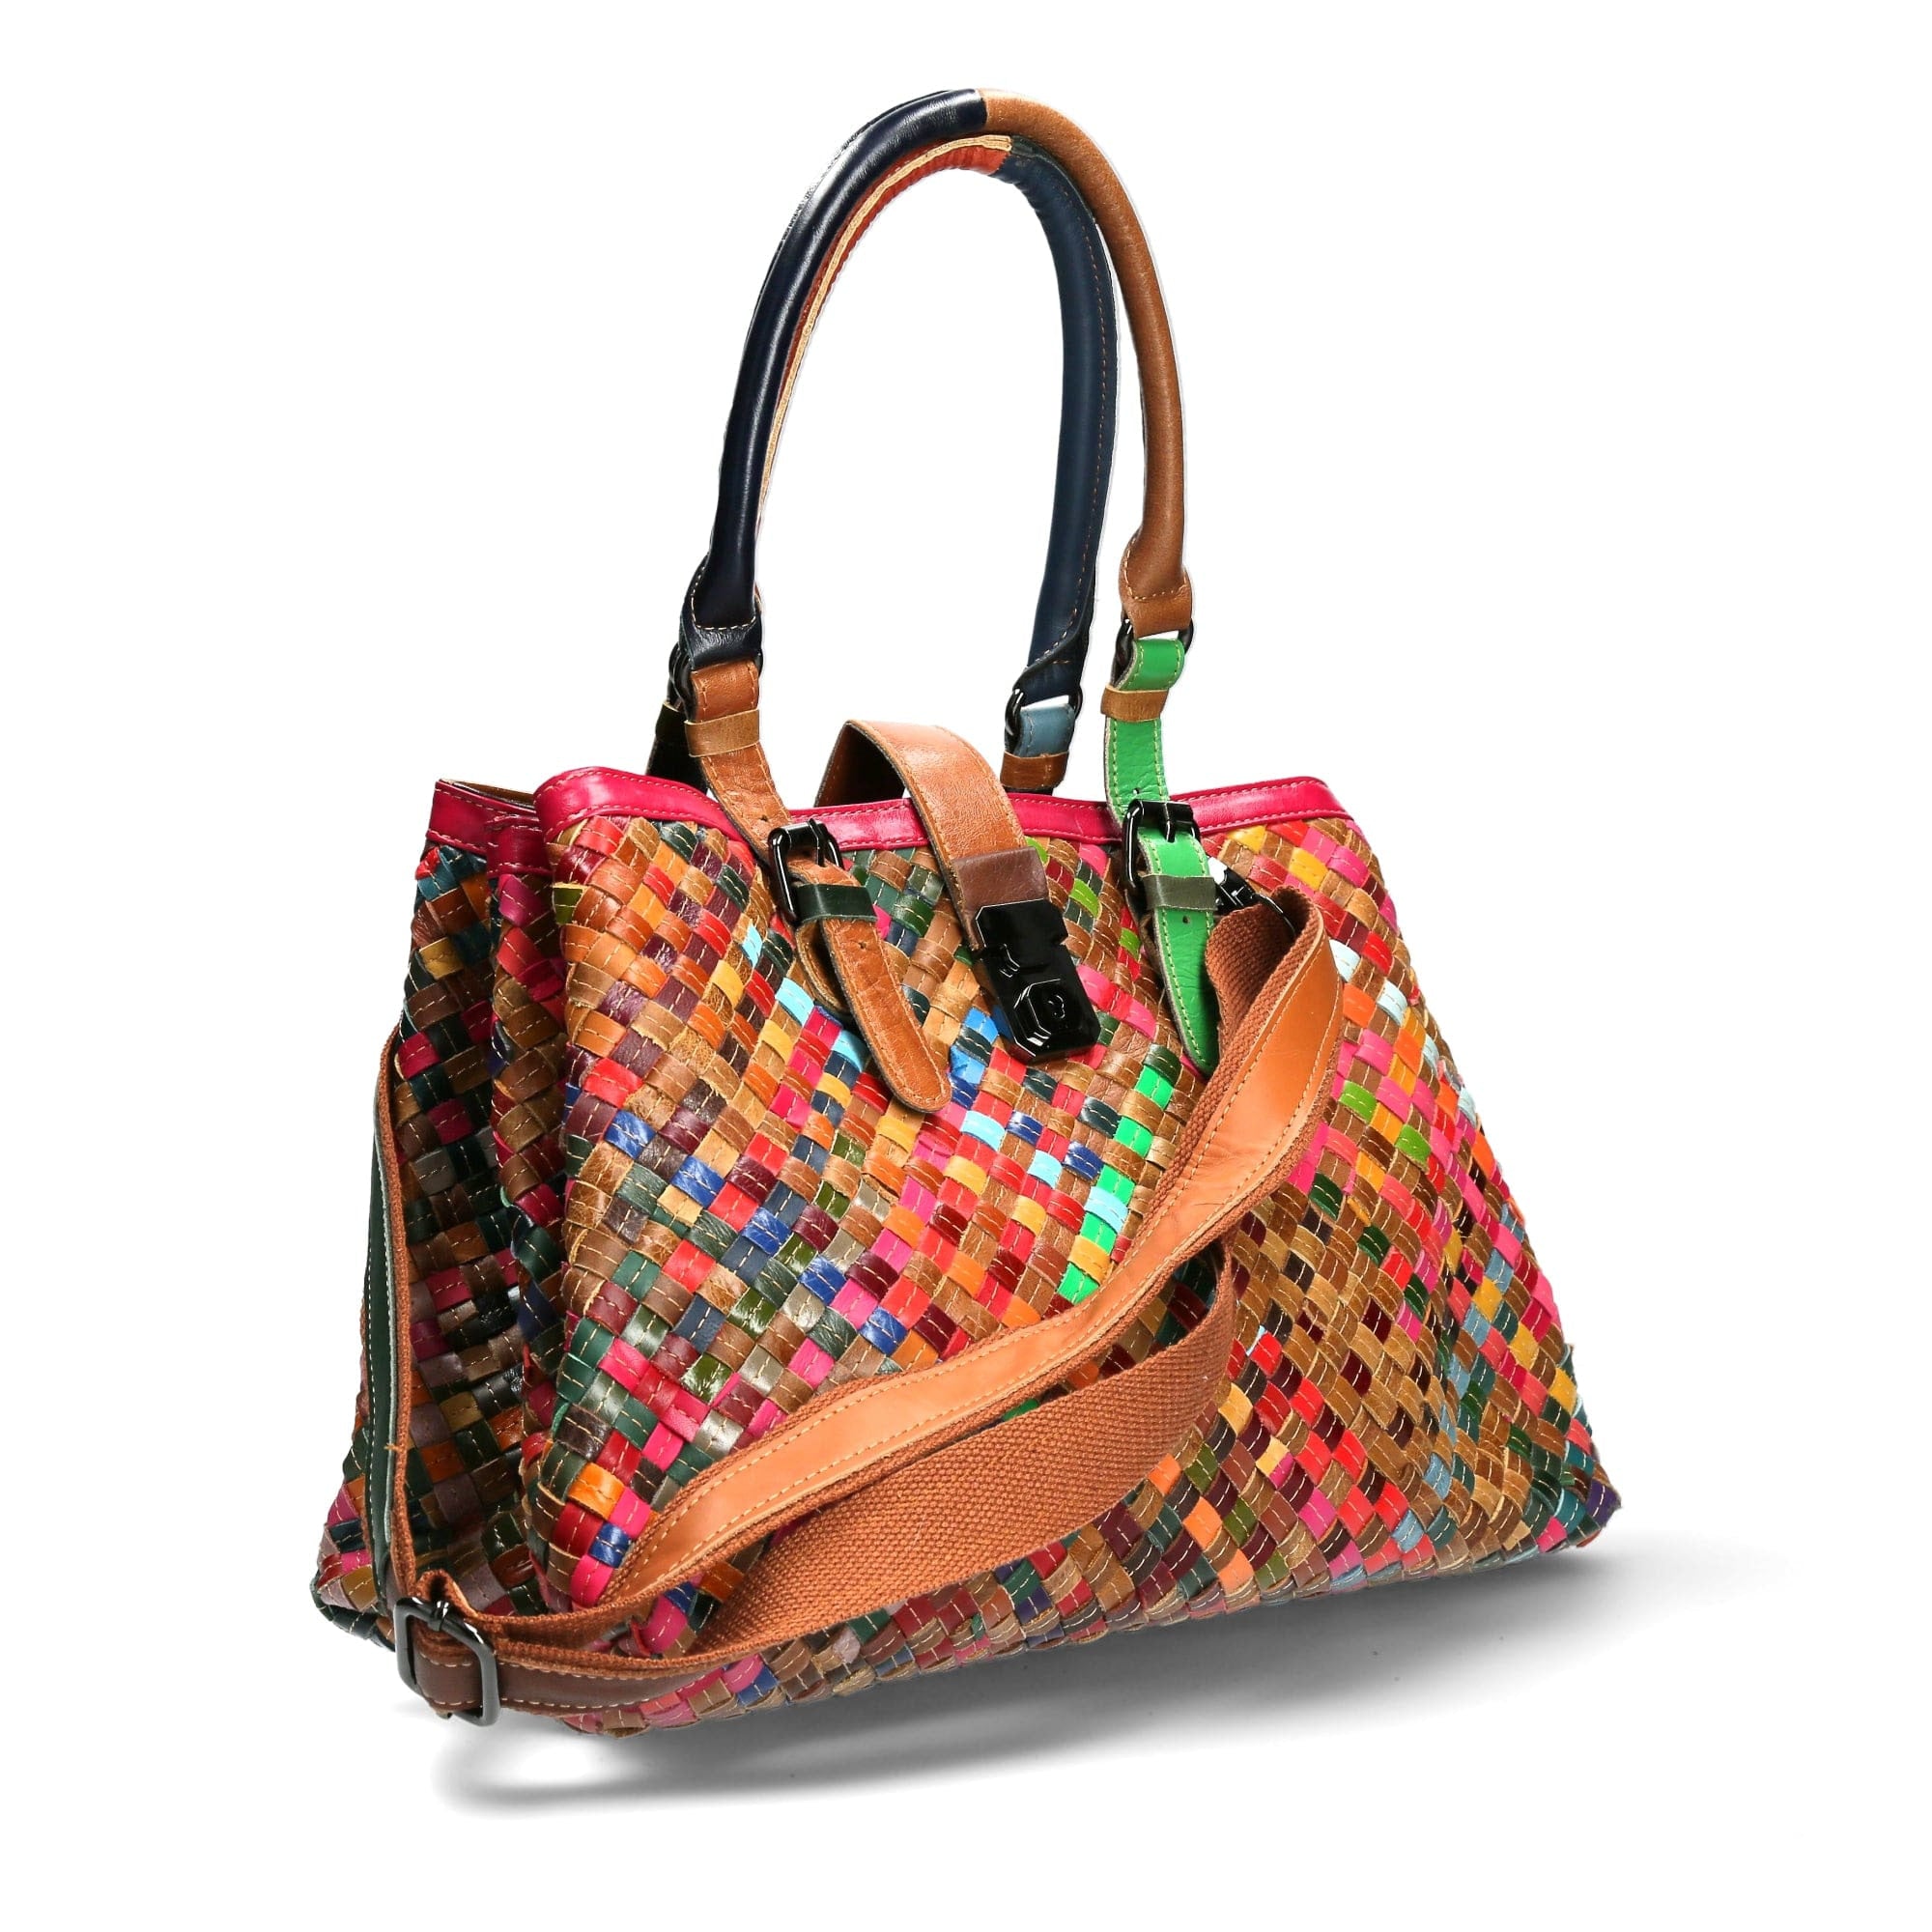 Exclusive Odila leather bag - Bag